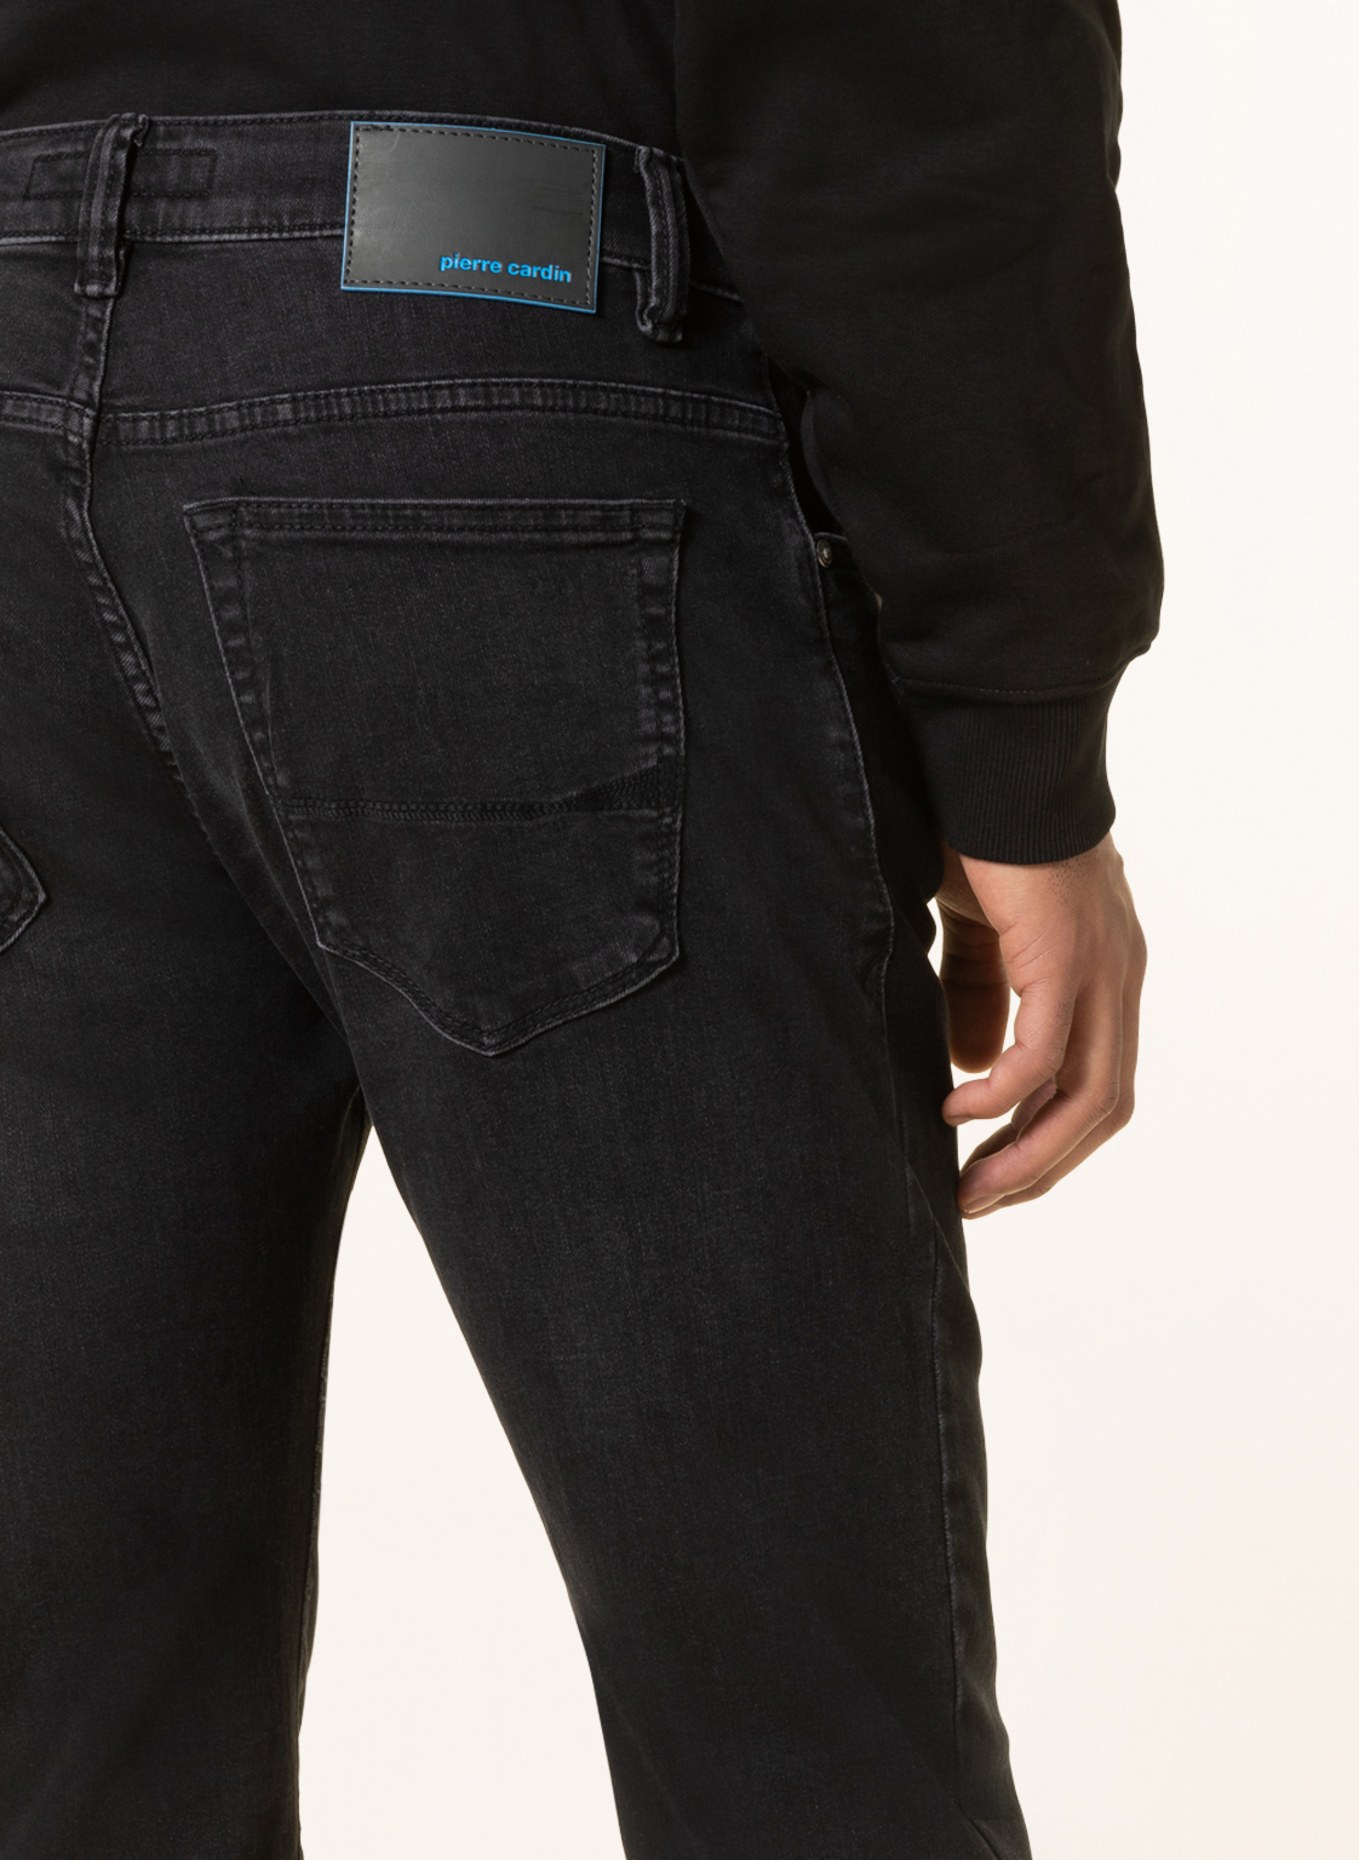 pierre cardin Jeans ANTIBES Slim Fit, Farbe: 9802 black black used (Bild 5)